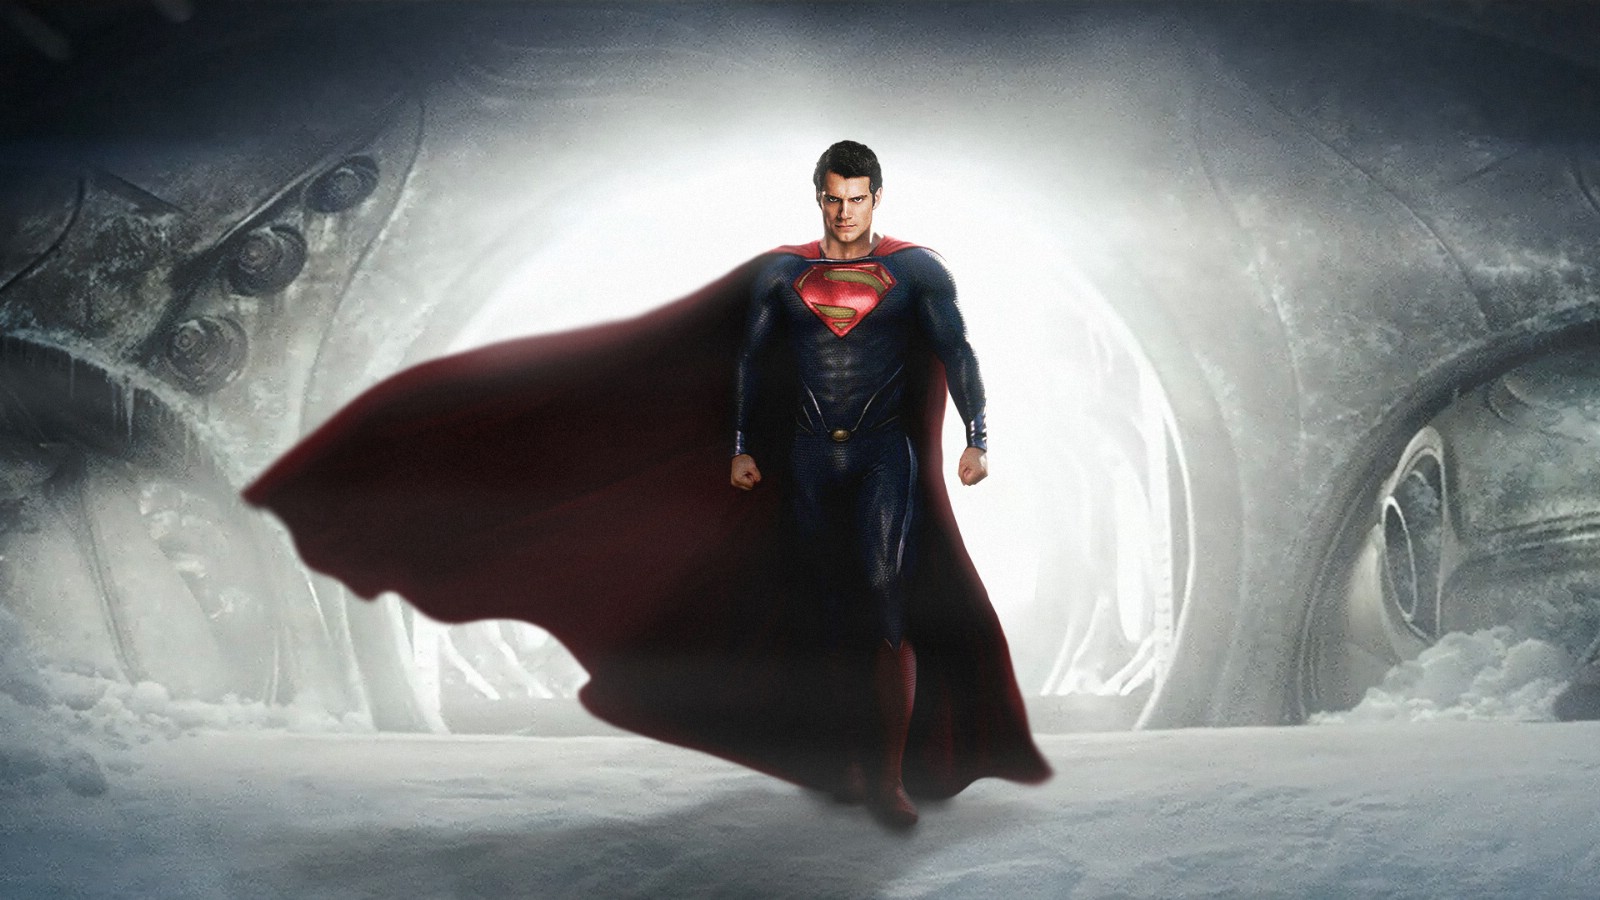 http://4.bp.blogspot.com/-j8w-LMbsGa8/UZlMFBs8jGI/AAAAAAAAAn8/s0qs9FVtyDQ/s1600/Zack+Snyder+in+Superman+Costume+Man+Of+Steel+Hd.jpg